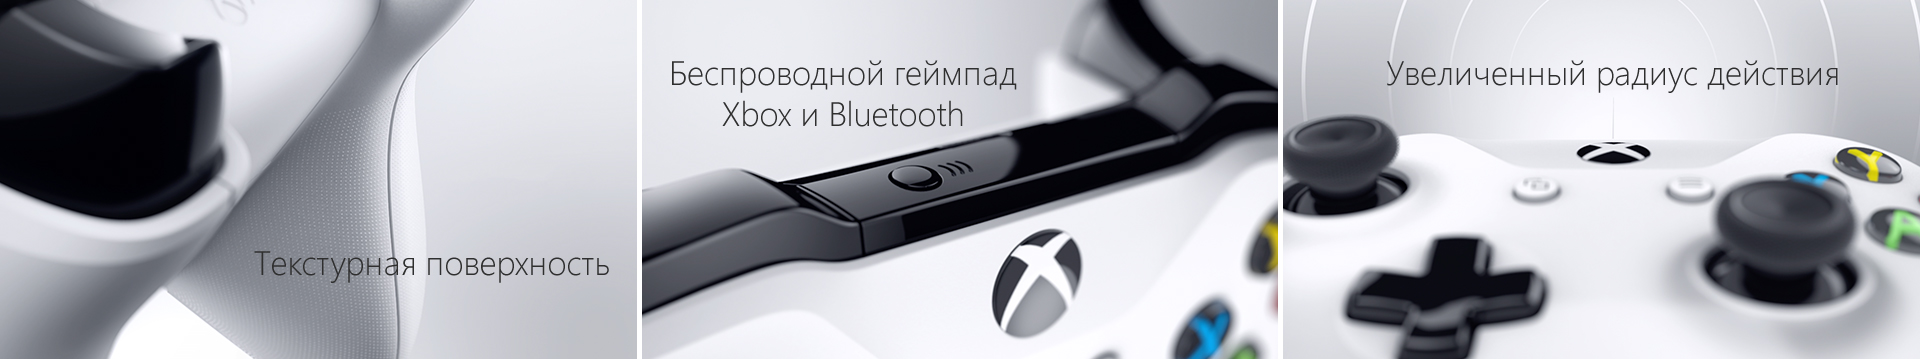 Microsoft Xbox One S Красноярск